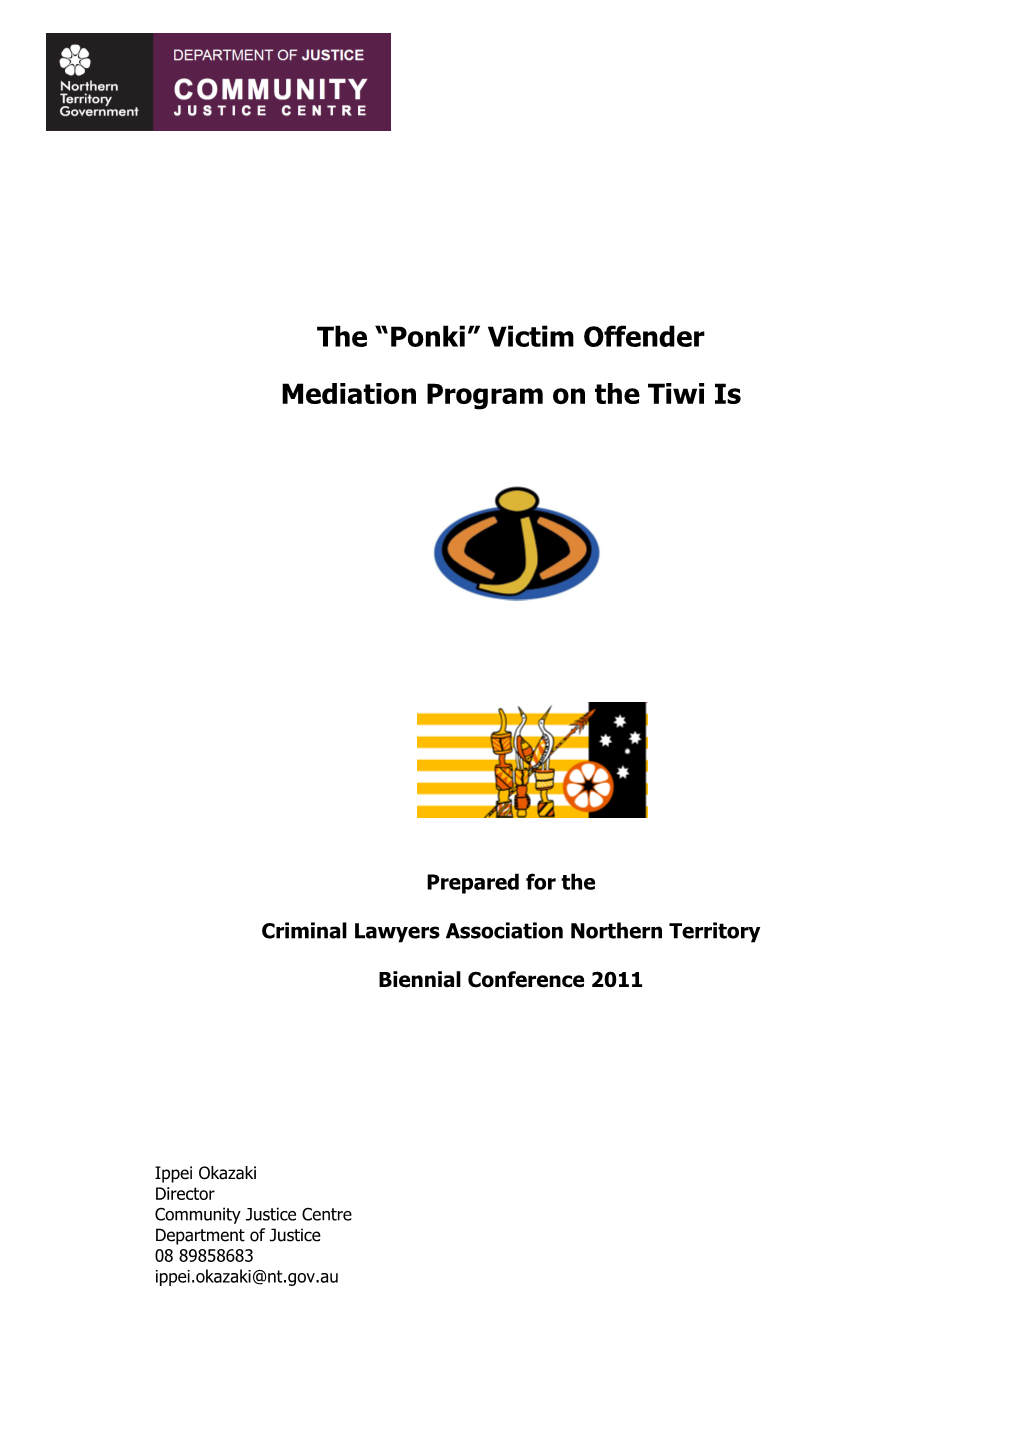 The “Ponki” Victim Offender Mediation Program on the Tiwi Is